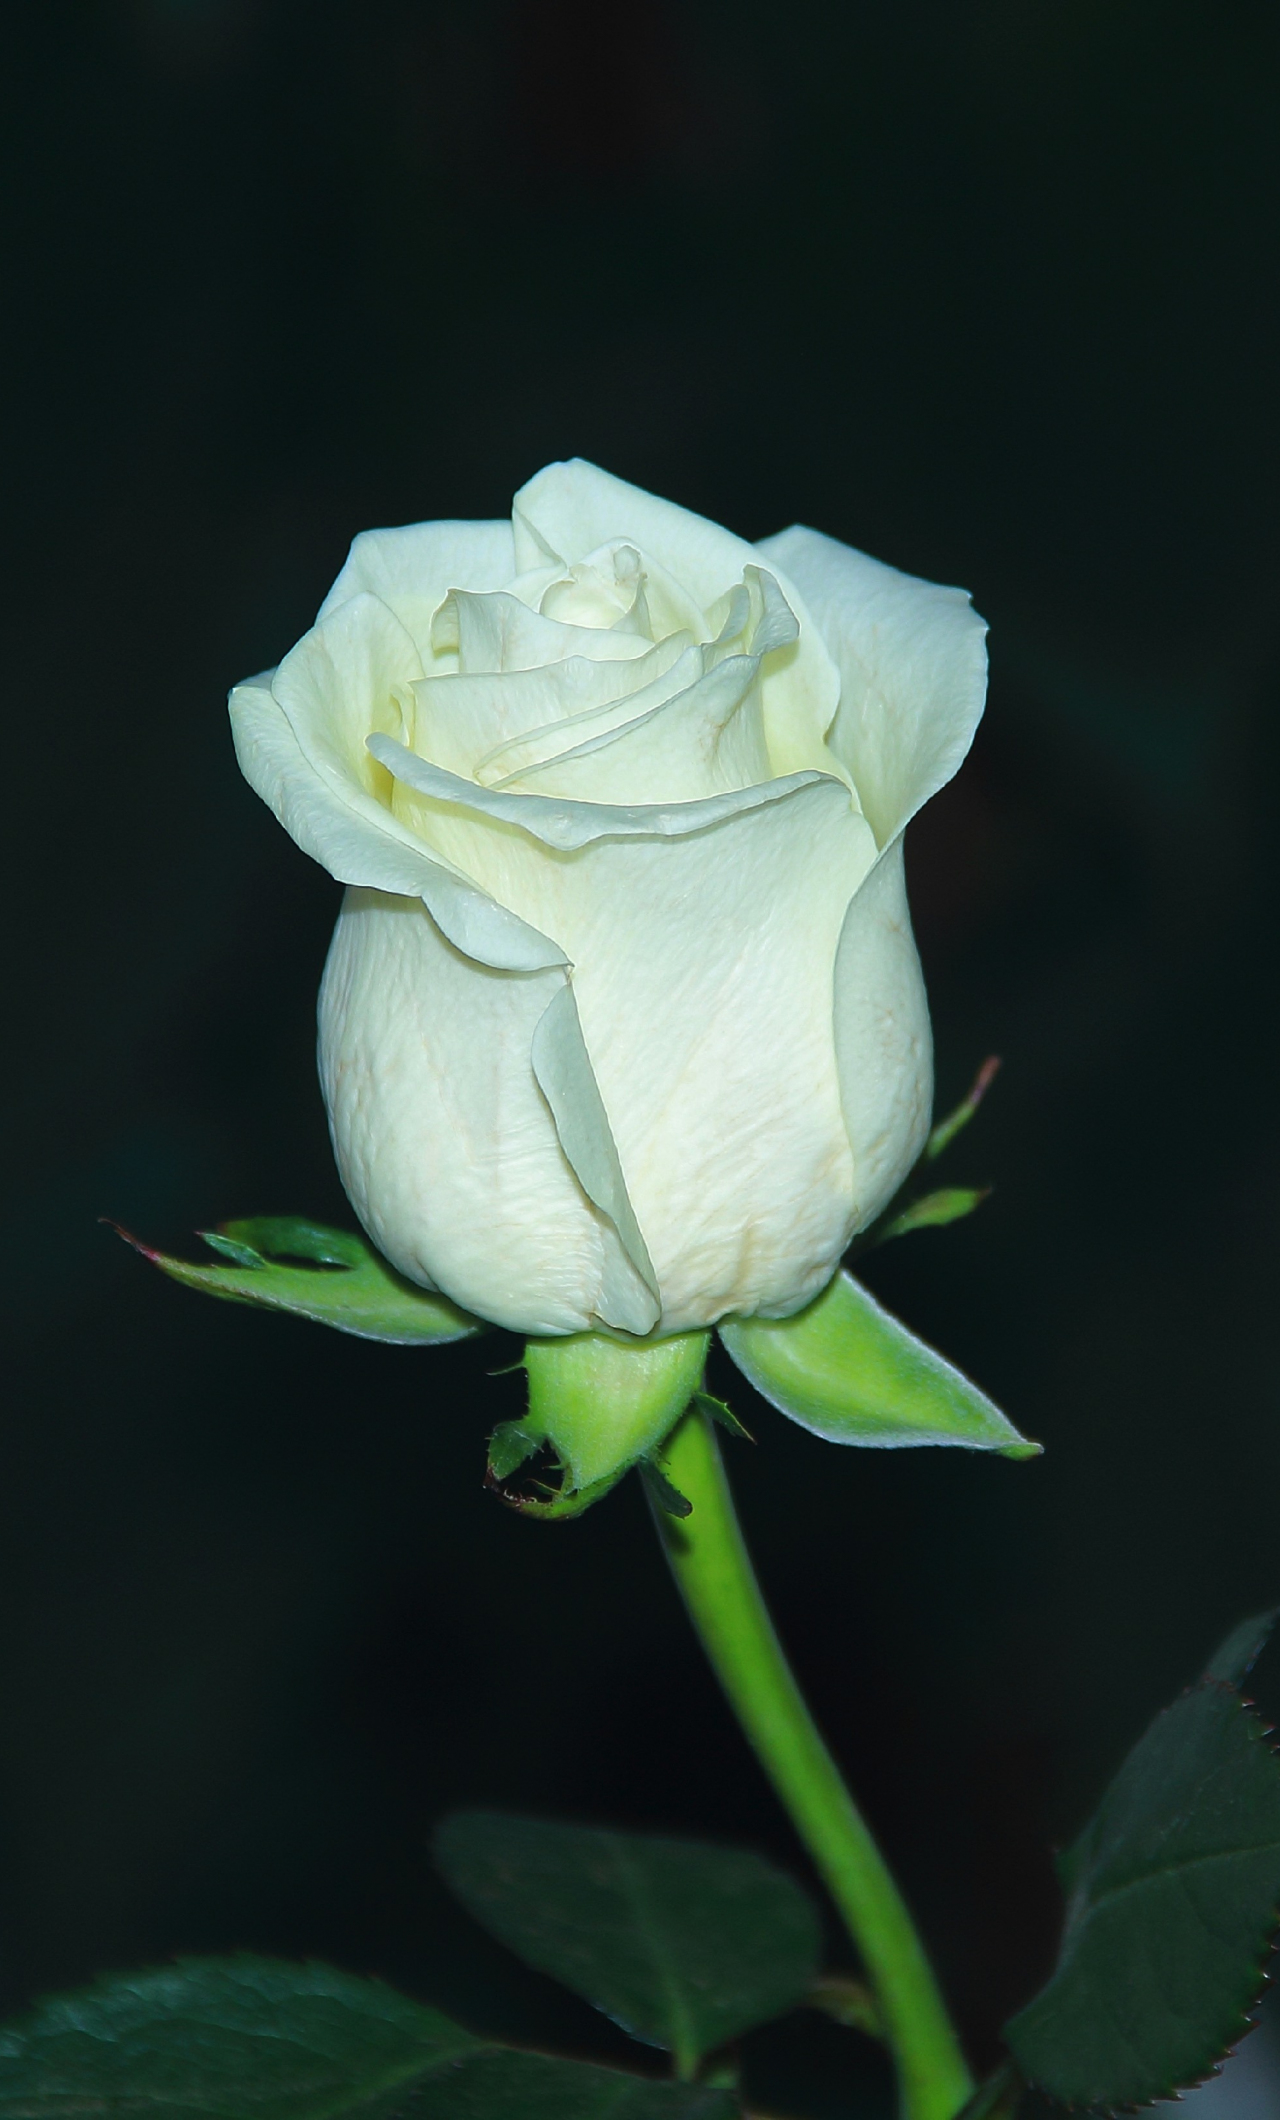 Download wallpaper 1280x2120 white rose, bud, flower, portrait, iphone 6  plus, 1280x2120 hd background, 2230